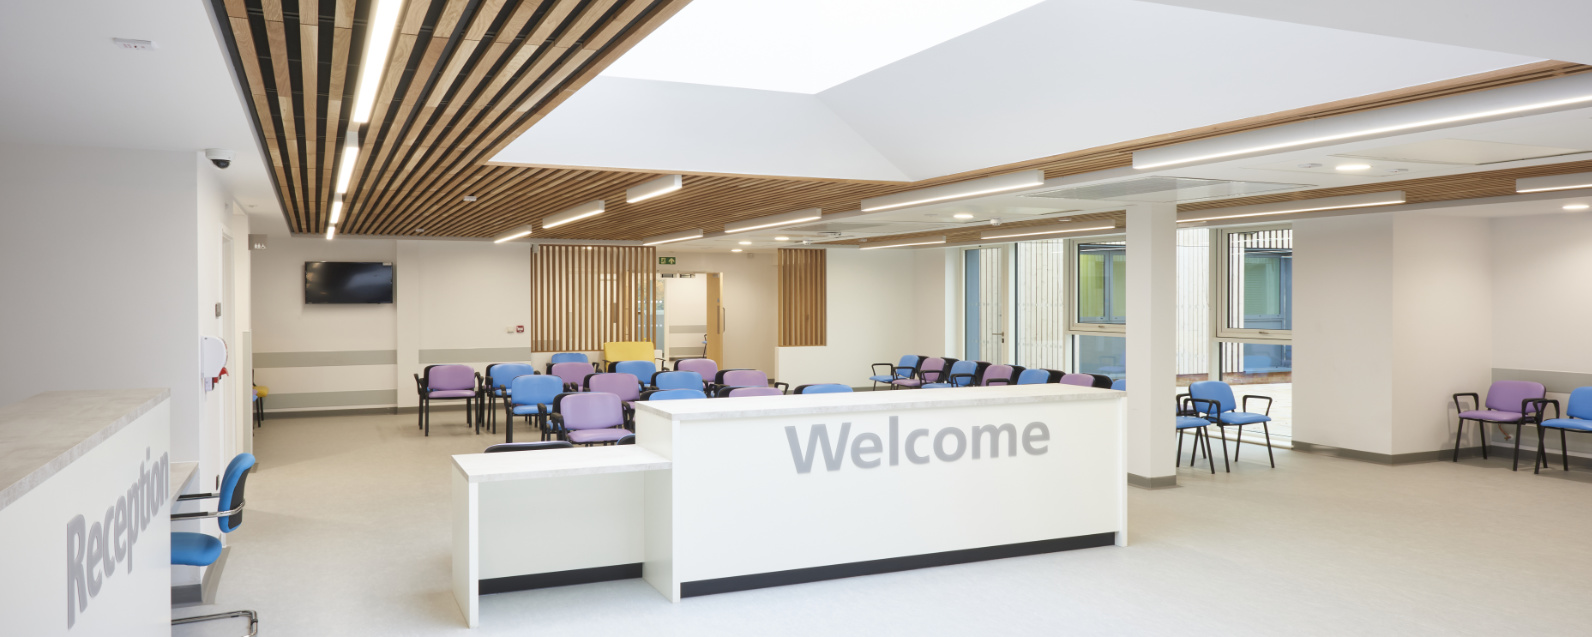 LSI-Architects-Edenbridge-Memorial-Health-Centre